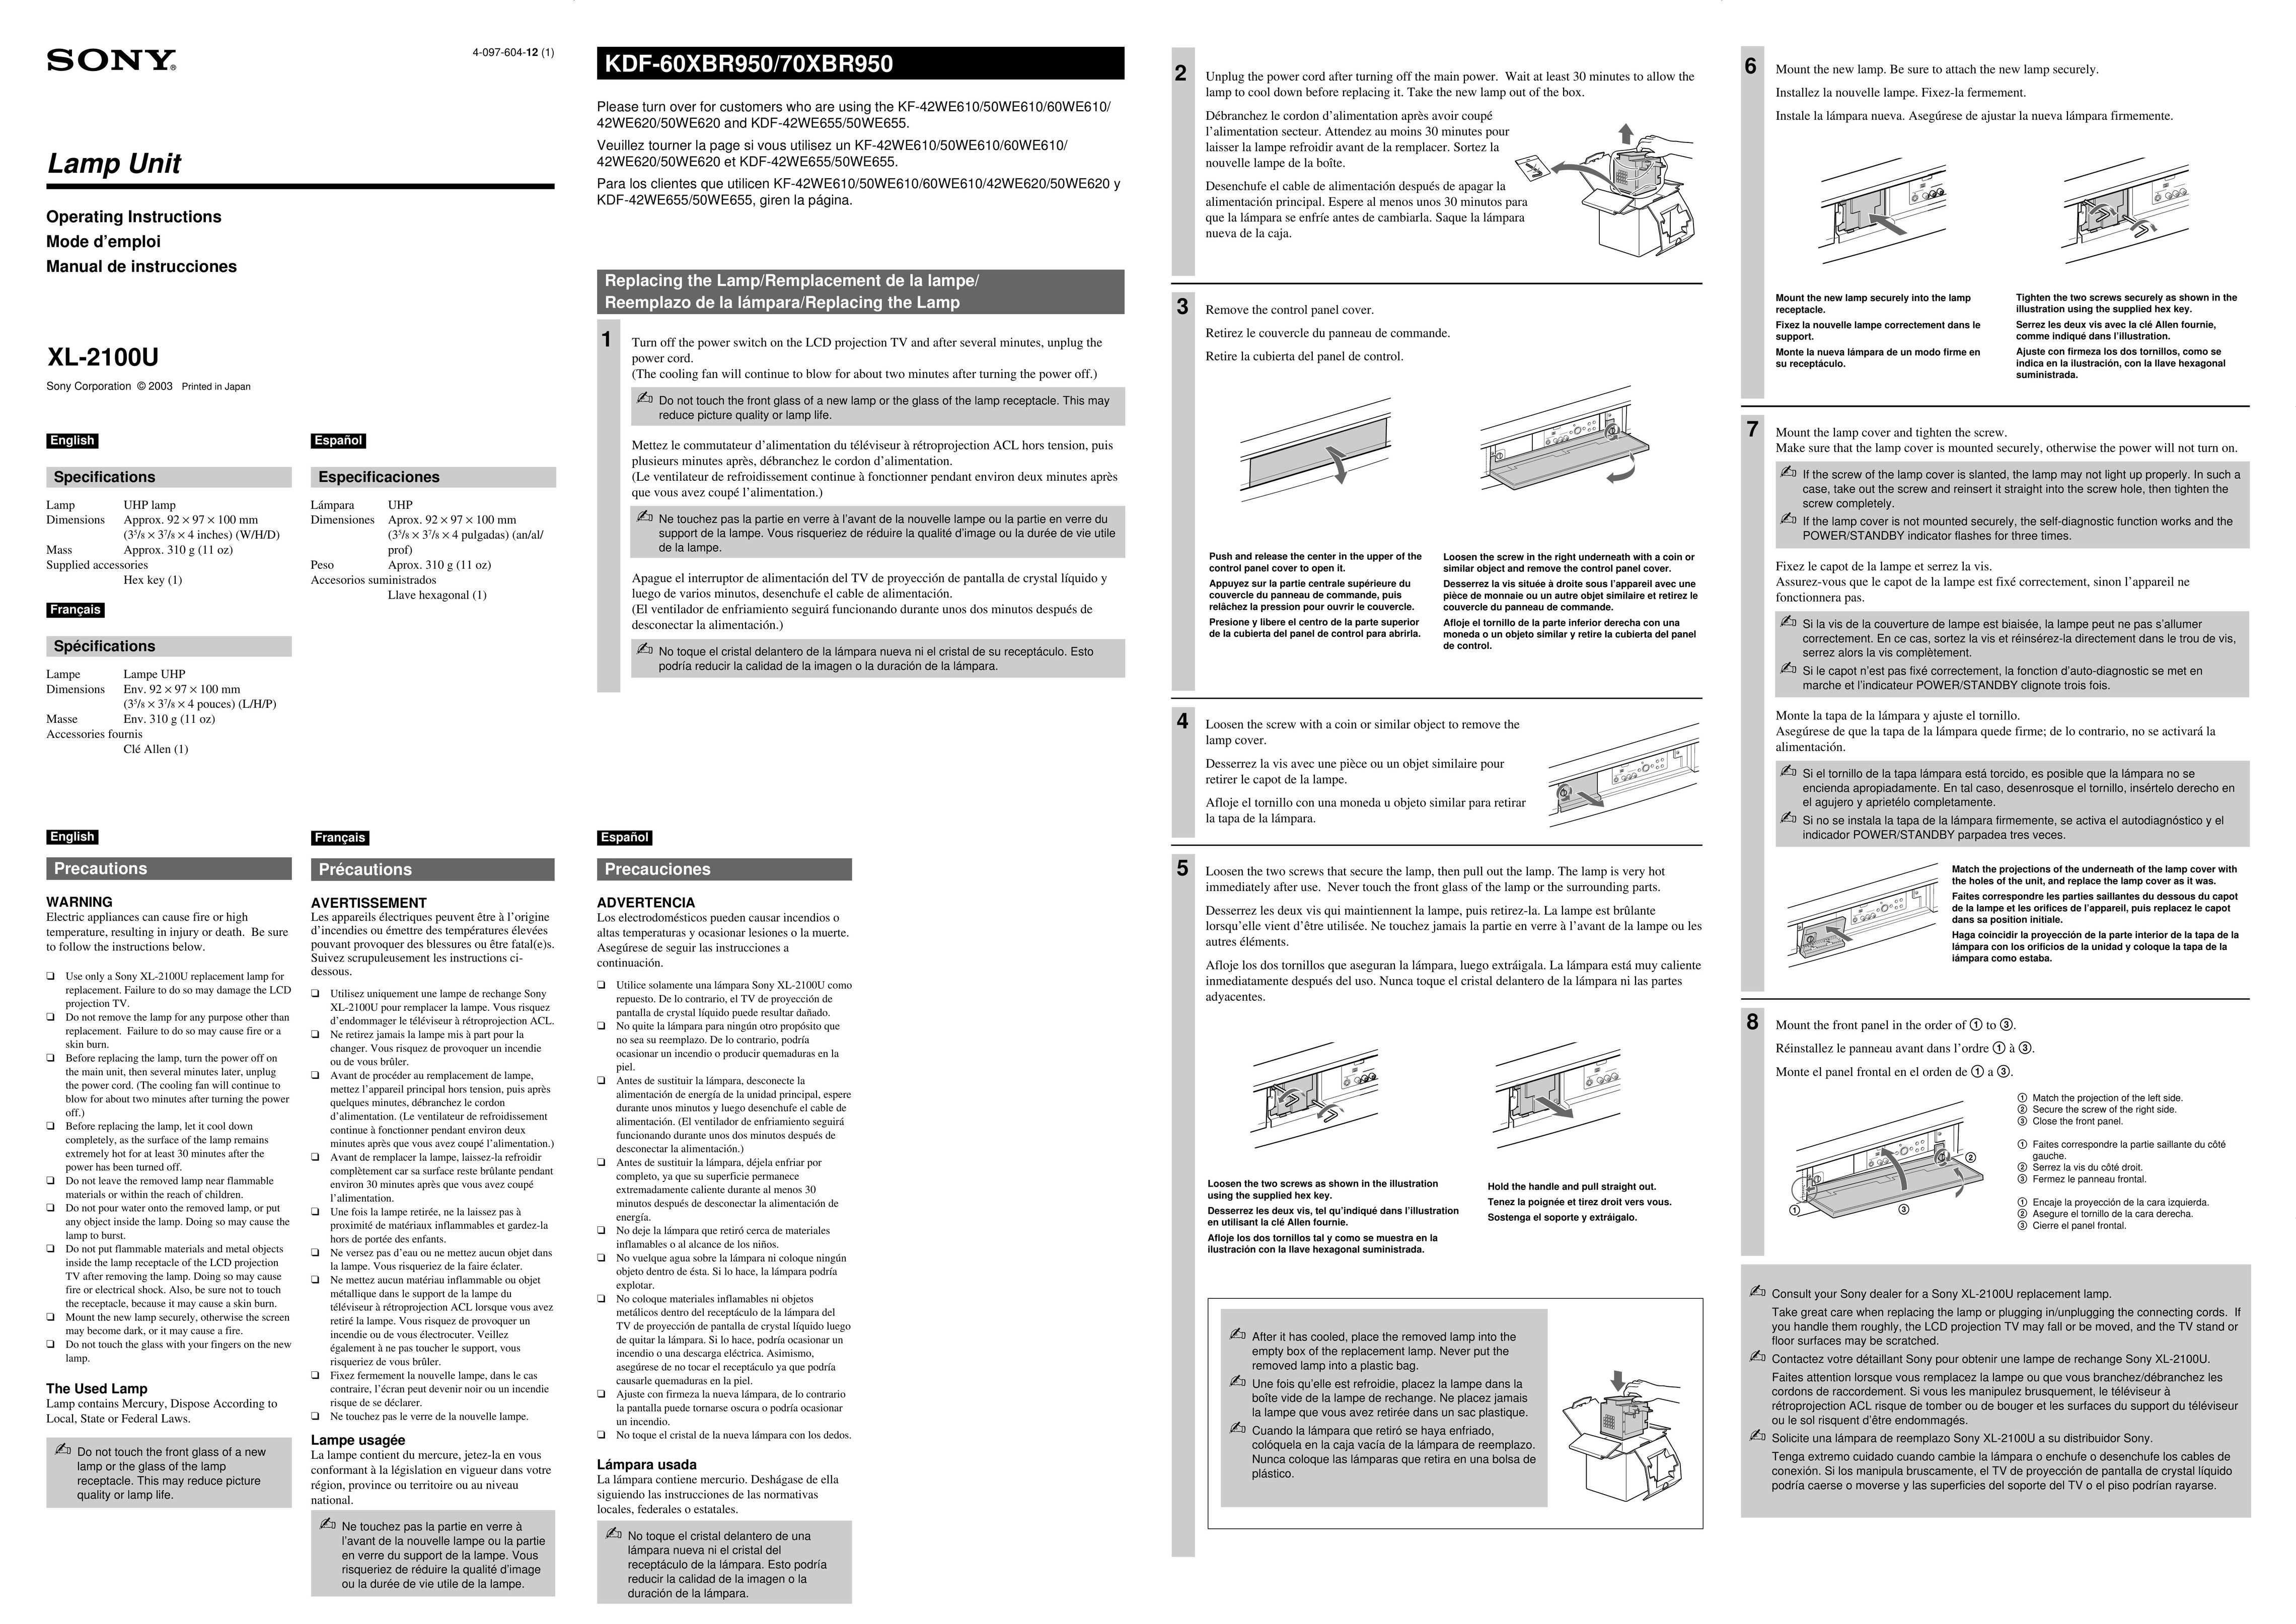 Sony XL-2100U Pet Fence User Manual